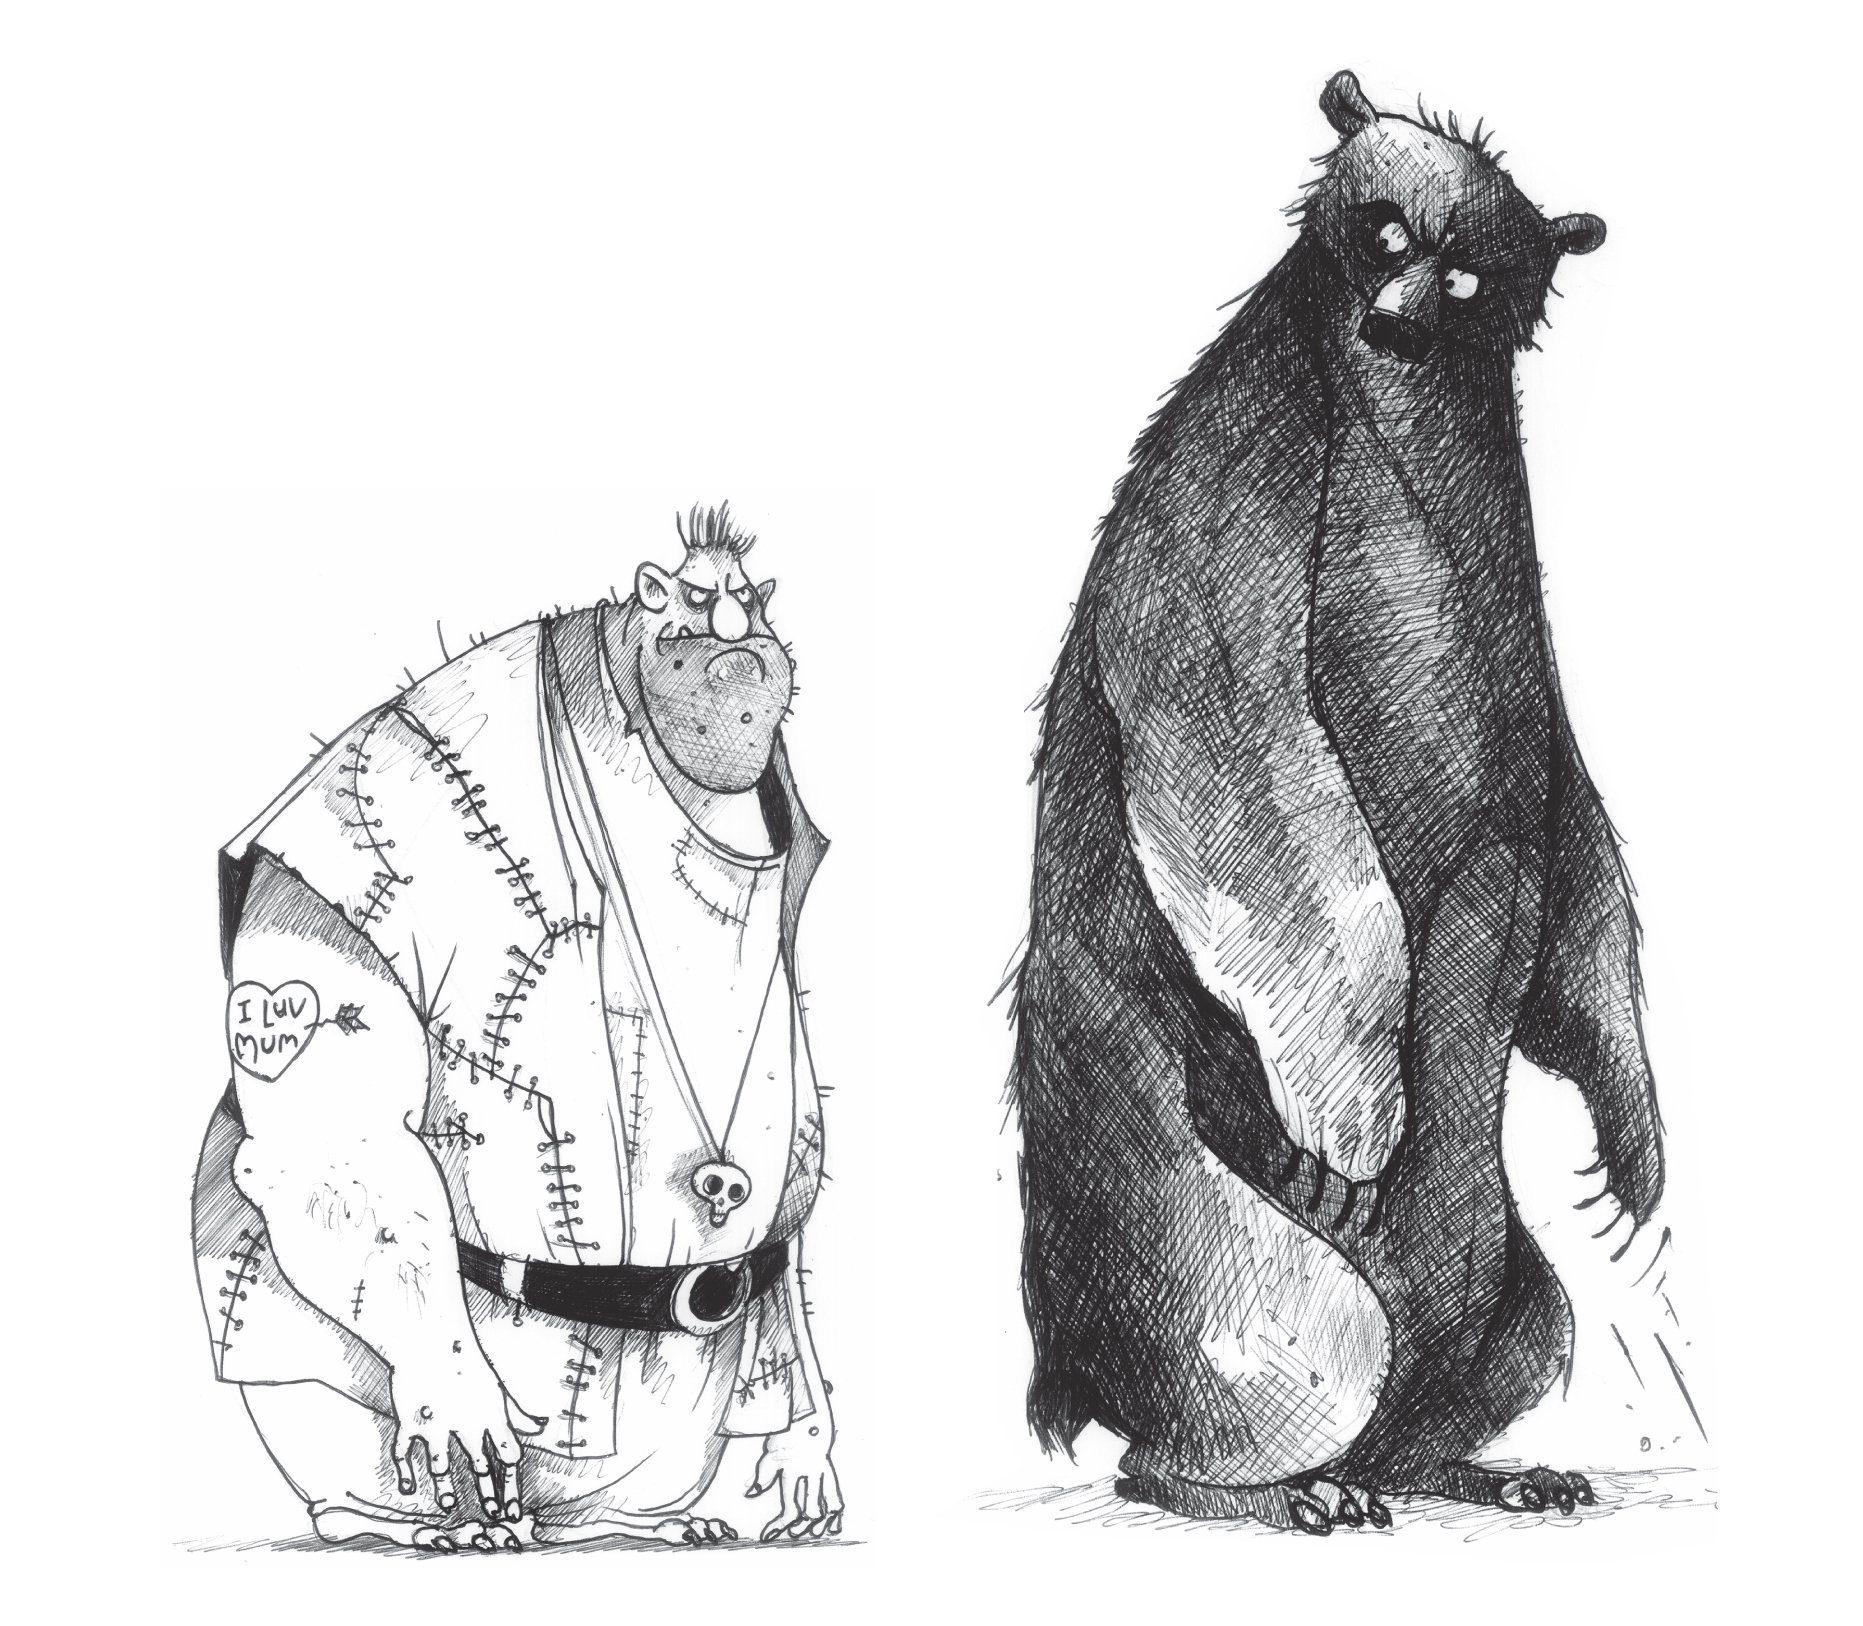 chris-mould-man-vs-bear-illustration.jpg